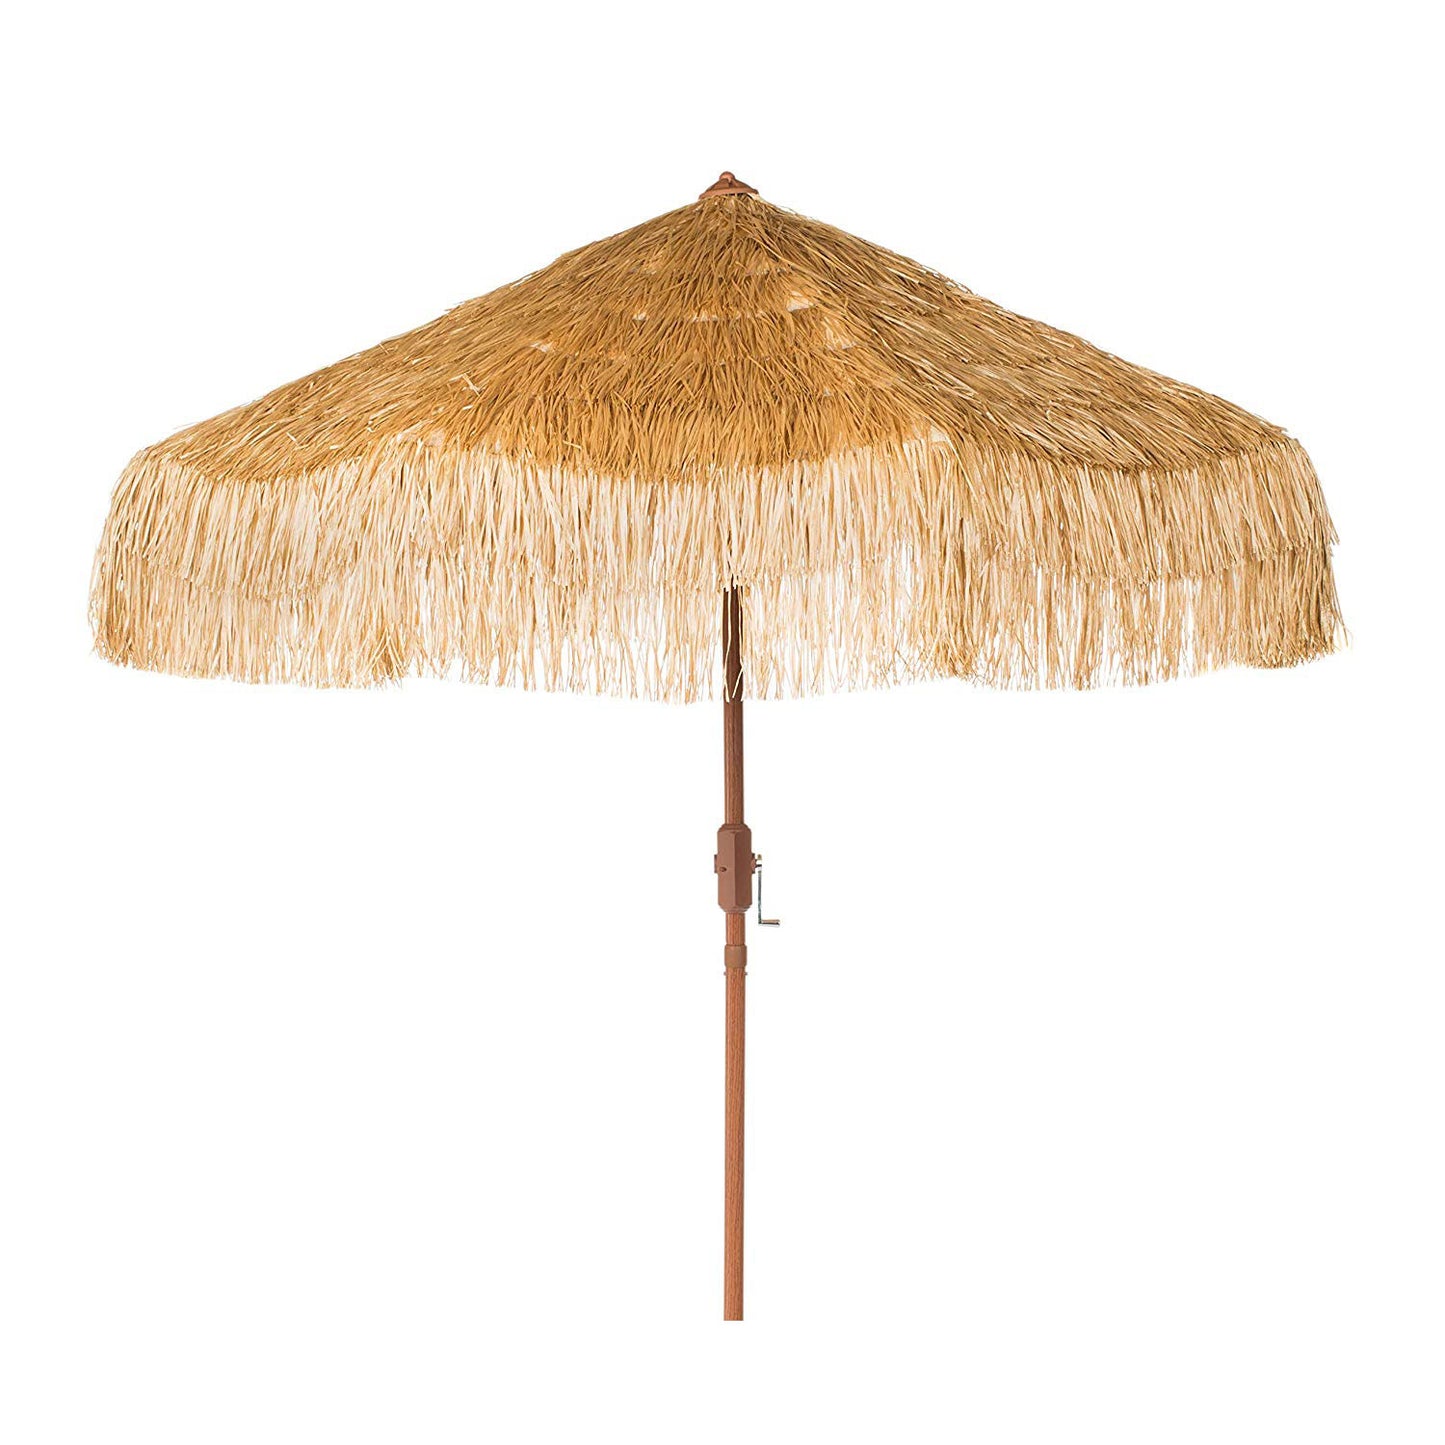 Garden/Deck 9' Shade Umbrella - Hula thatch